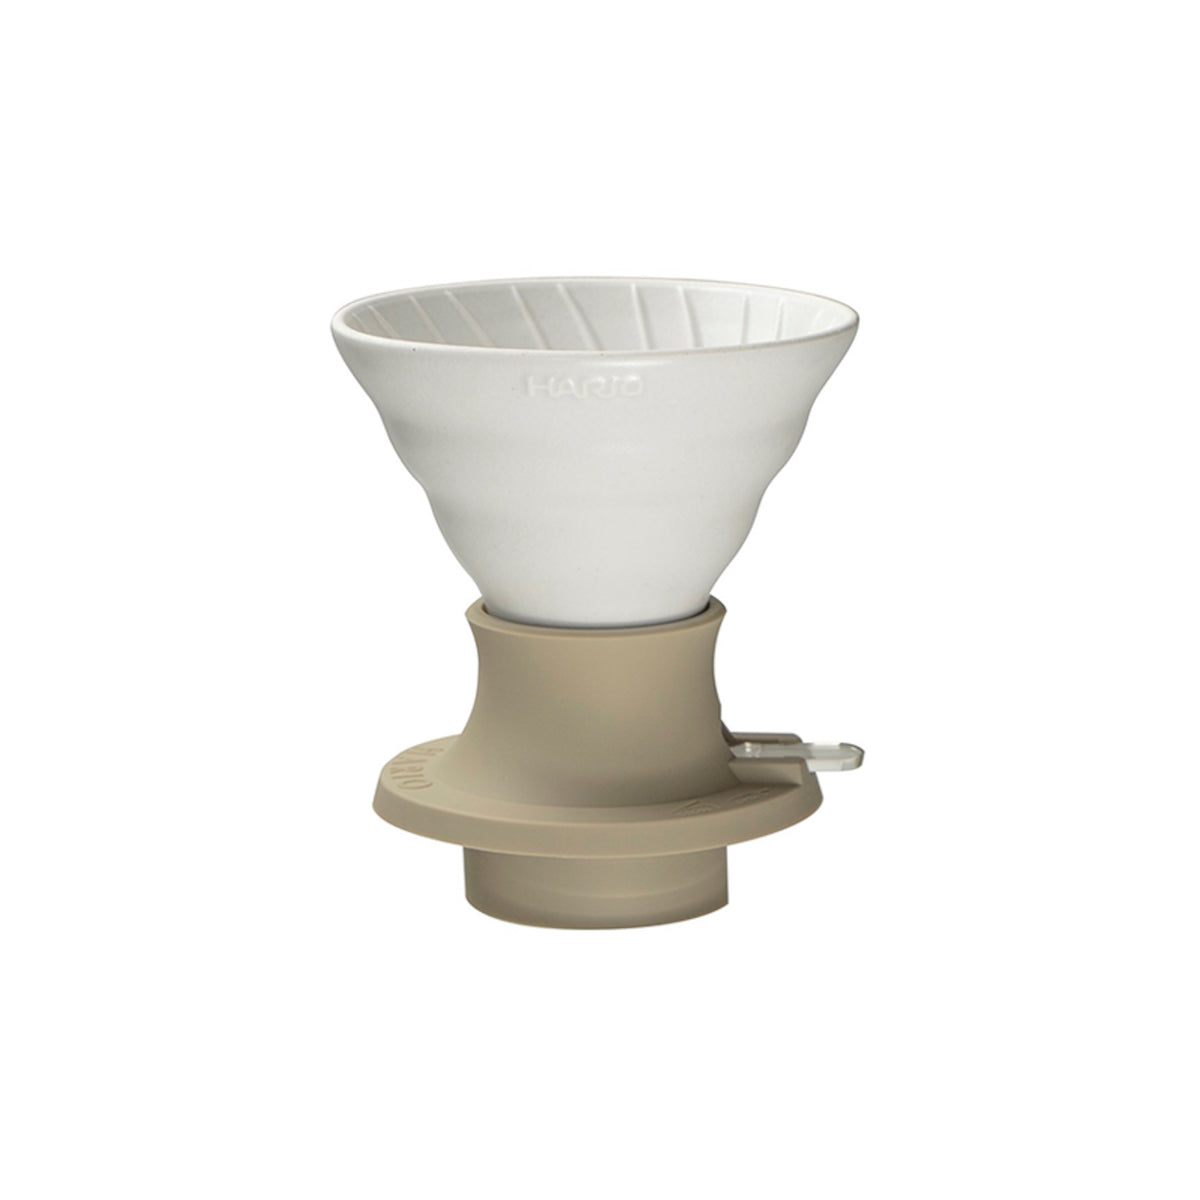 HARIO x Lin's Ceramics Studio Swtich Immersion Coffee Dripper - Ivory White